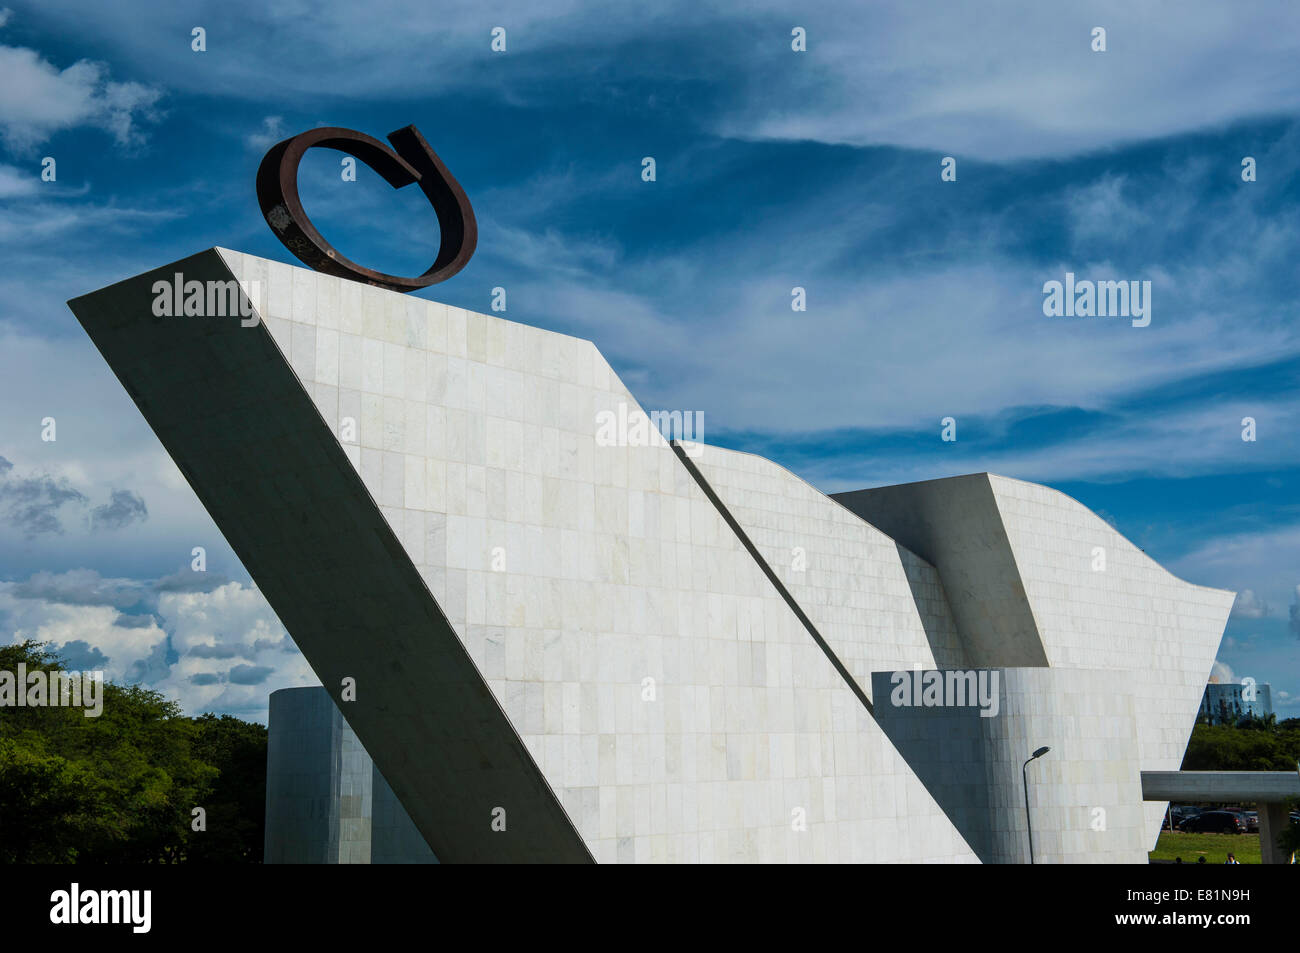 Architectural art by Oscar Niemeier at the Plaza of the Three Powers, Brasília, Brazil Stock Photo